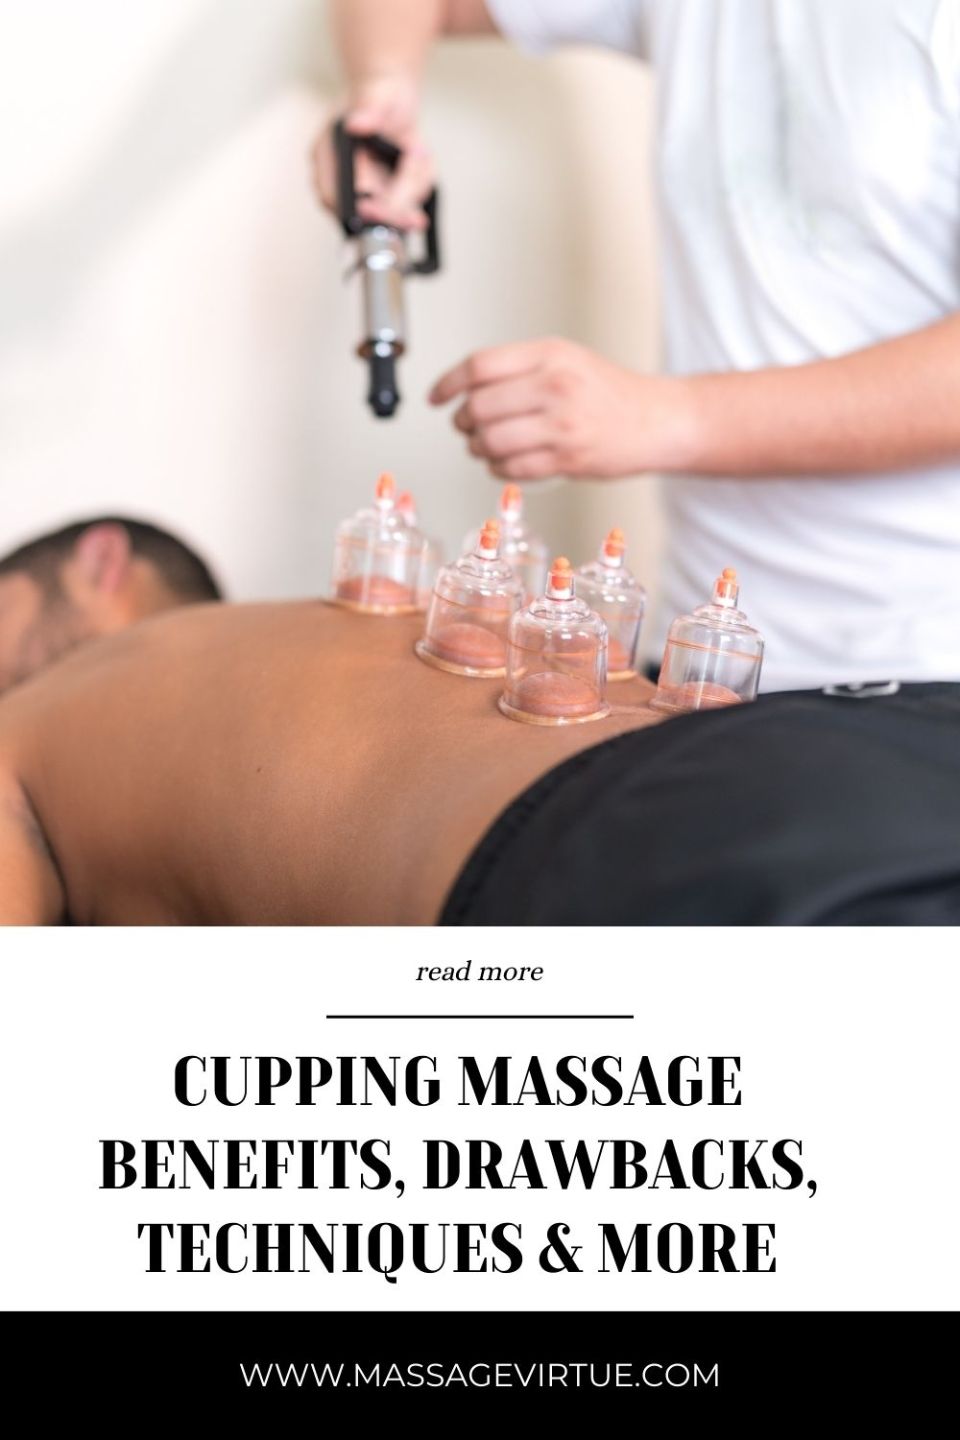 Cupping Massage benefits